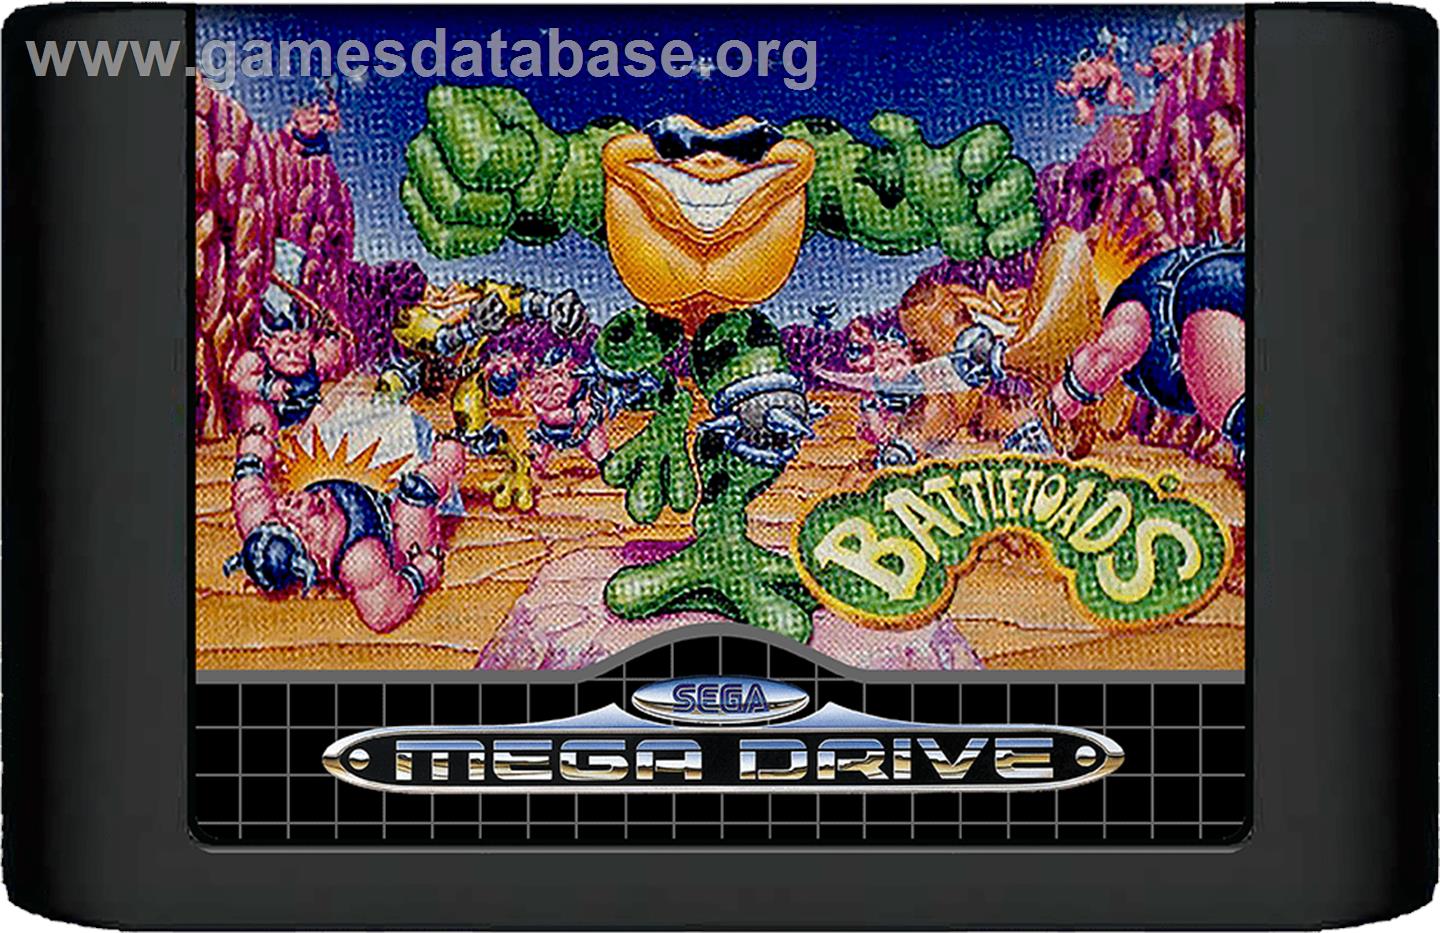 Battletoads - Sega Genesis - Artwork - Cartridge